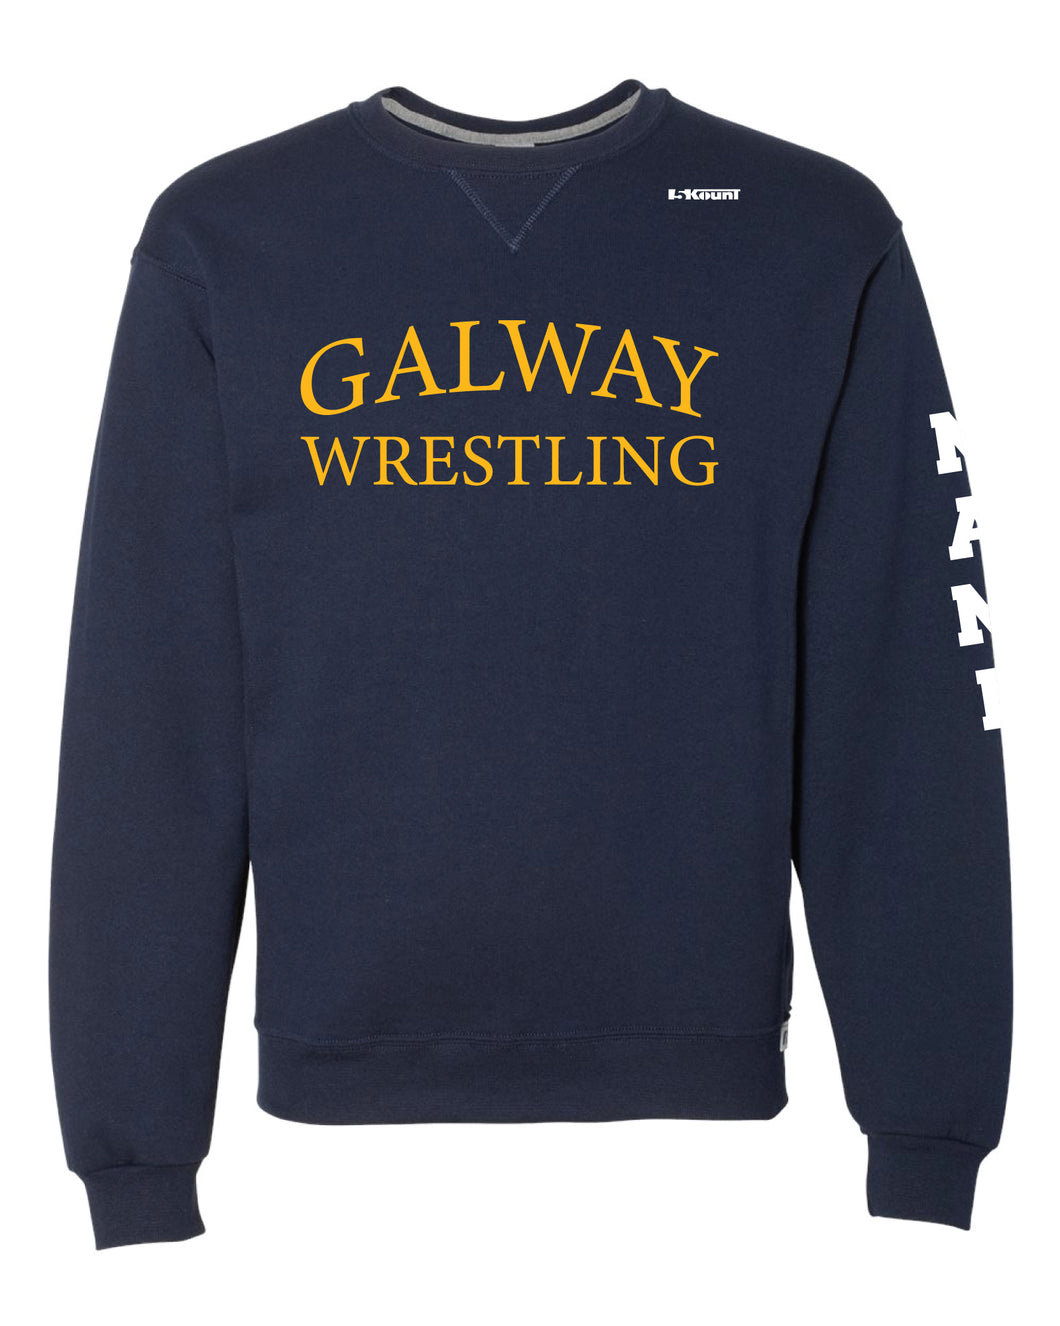 Galway Wrestling Russell Athletic Cotton Crewneck Sweatshirt - Navy - 5KounT2018